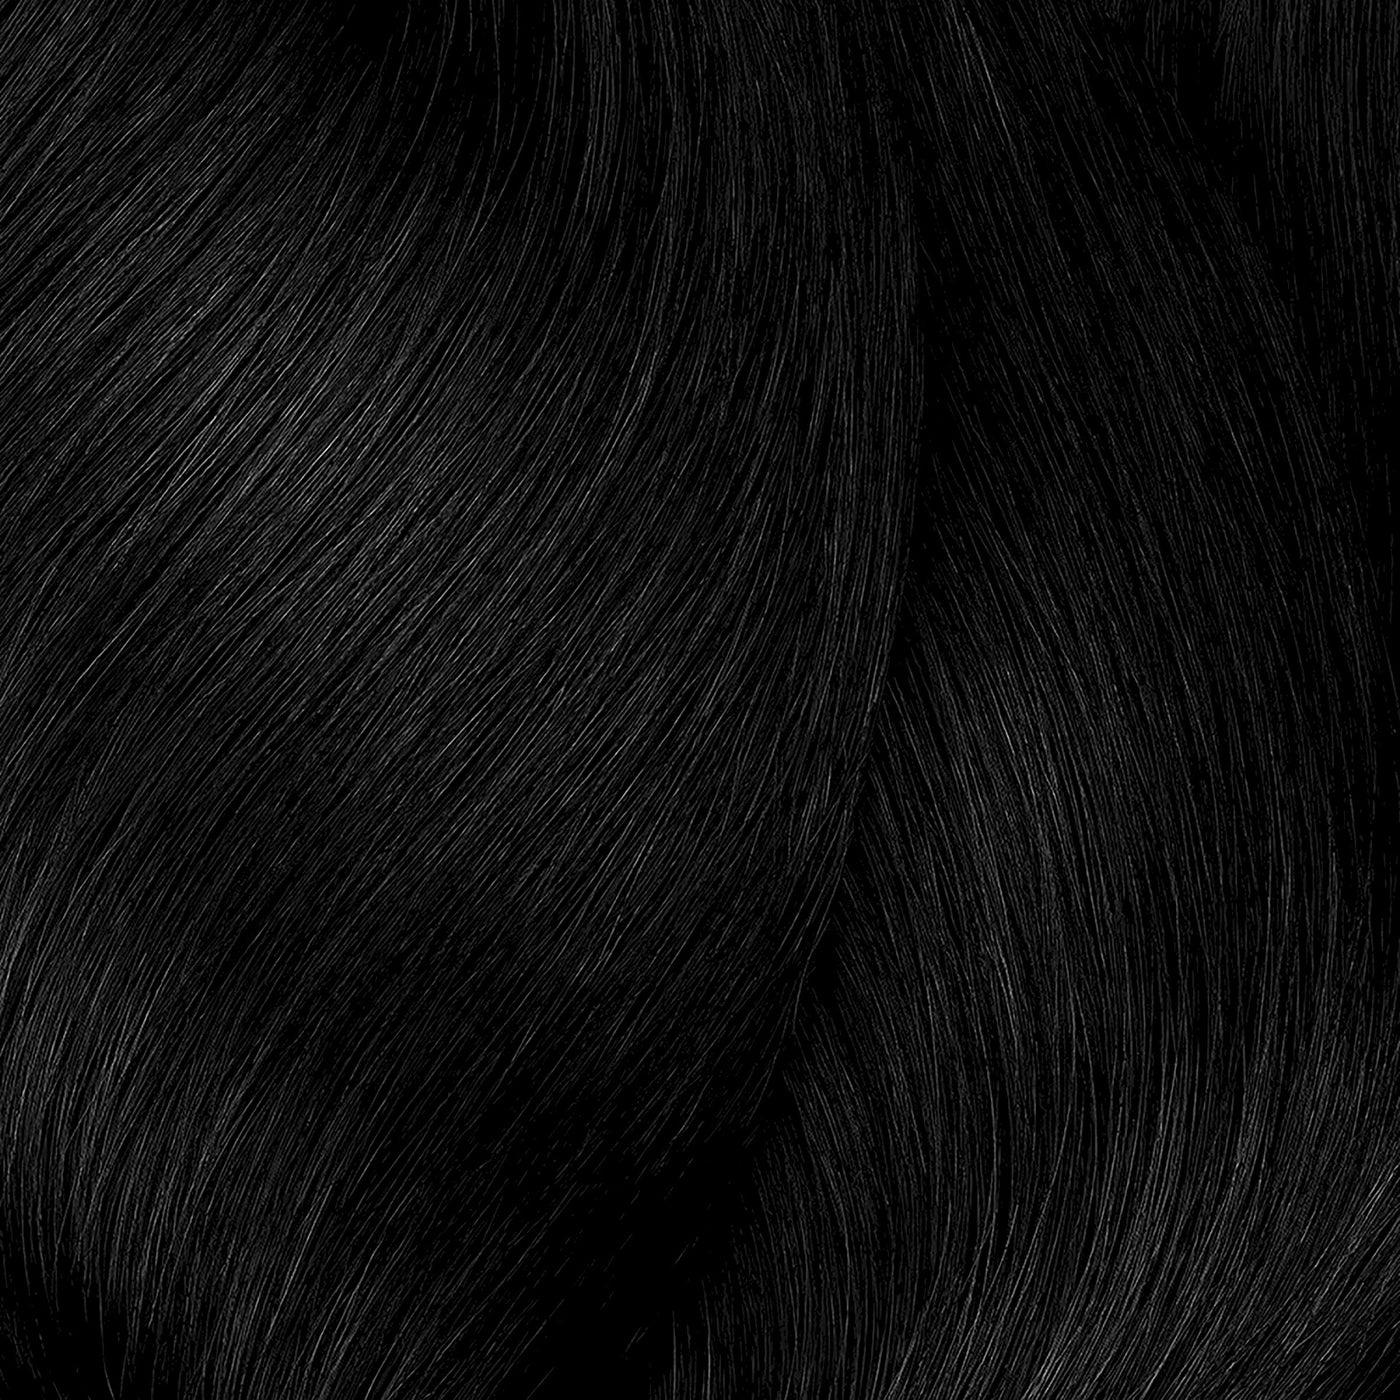 L'Oreal Professionnel iNOA Ammonia Free Permanent Hair Colour 60g